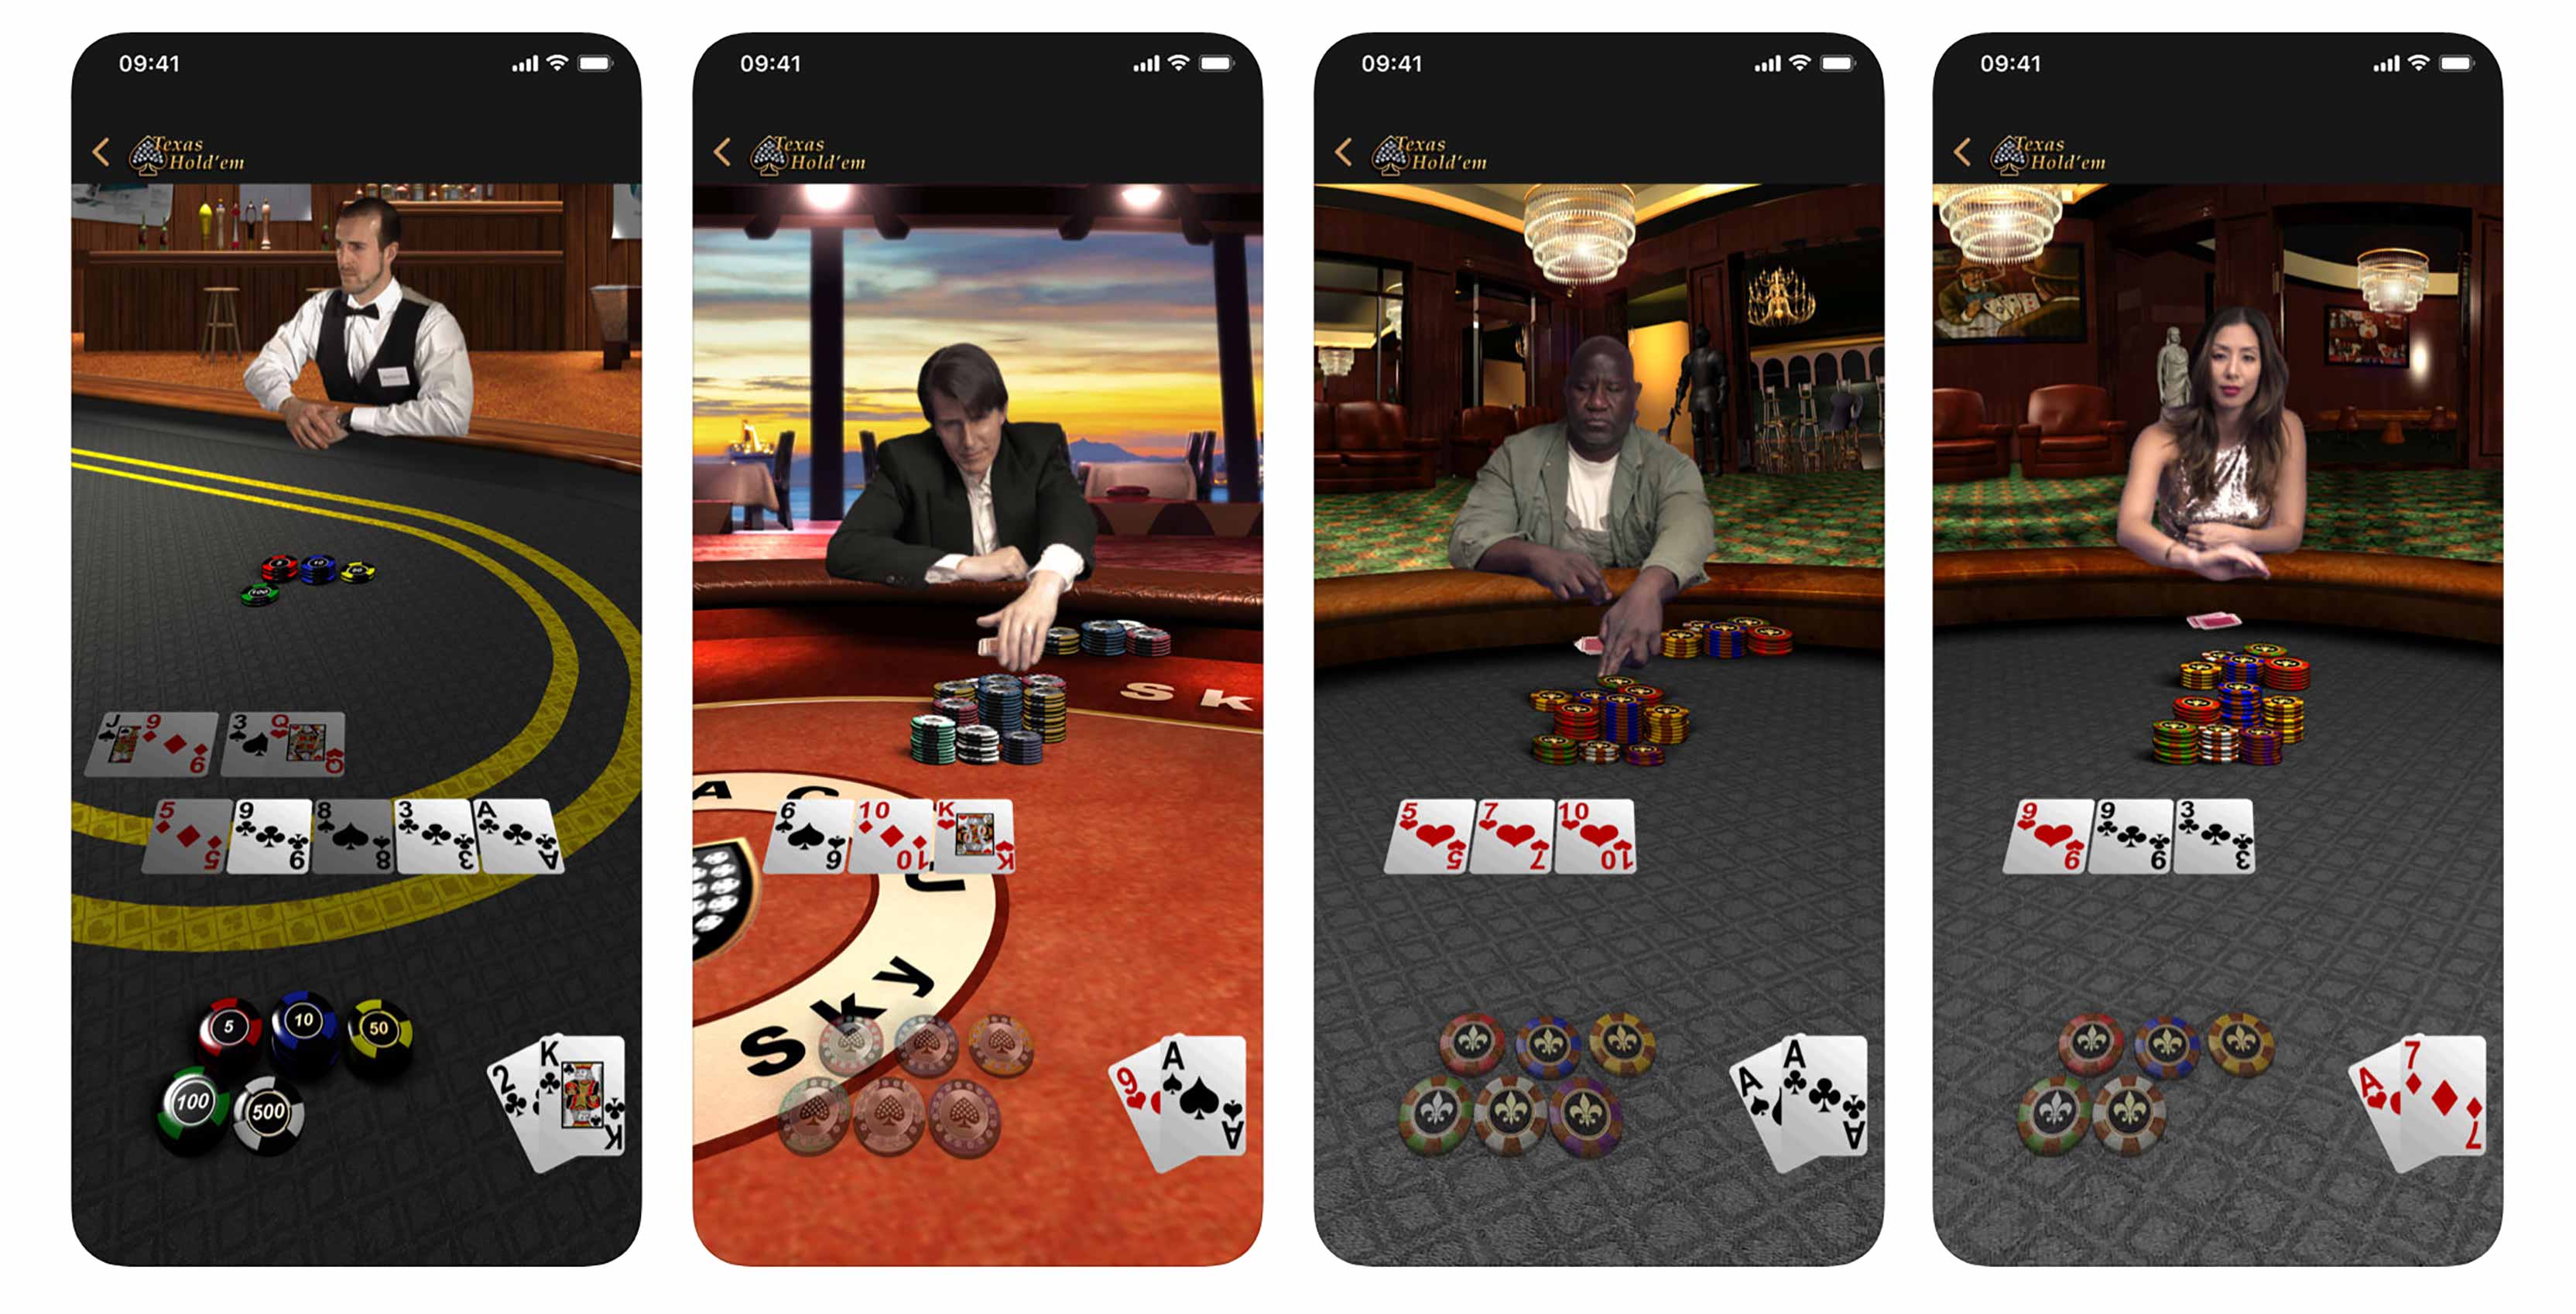 download the last version for apple WSOP Poker: Texas Holdem Game